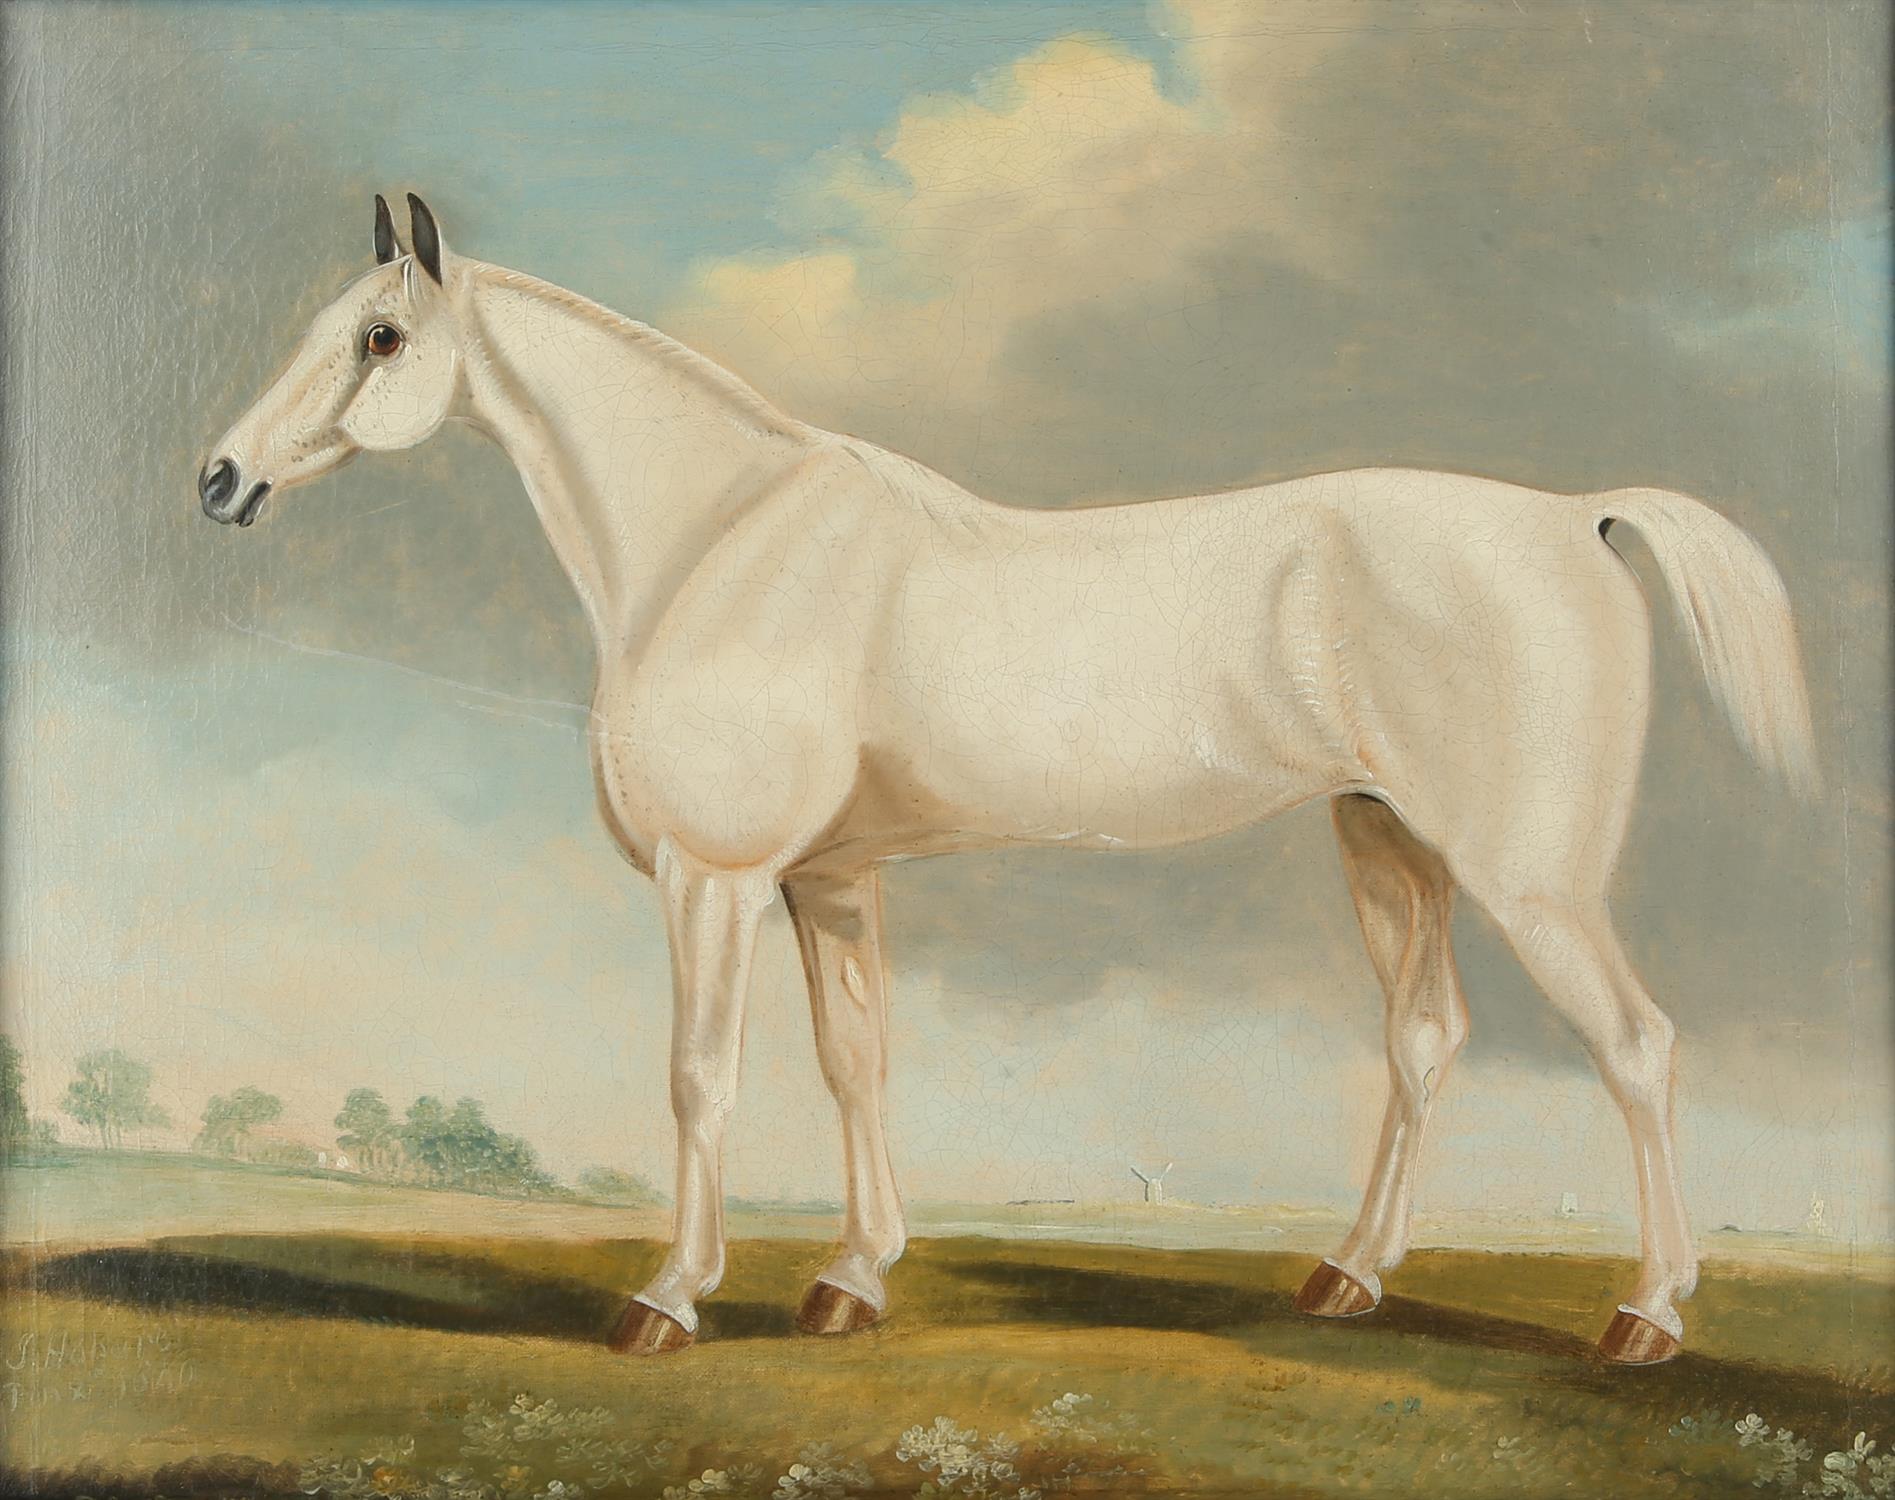 Attributed to John Robert Hobart (British, 1788-1863), 'Alfred Munnings's Grandfather's Horse'